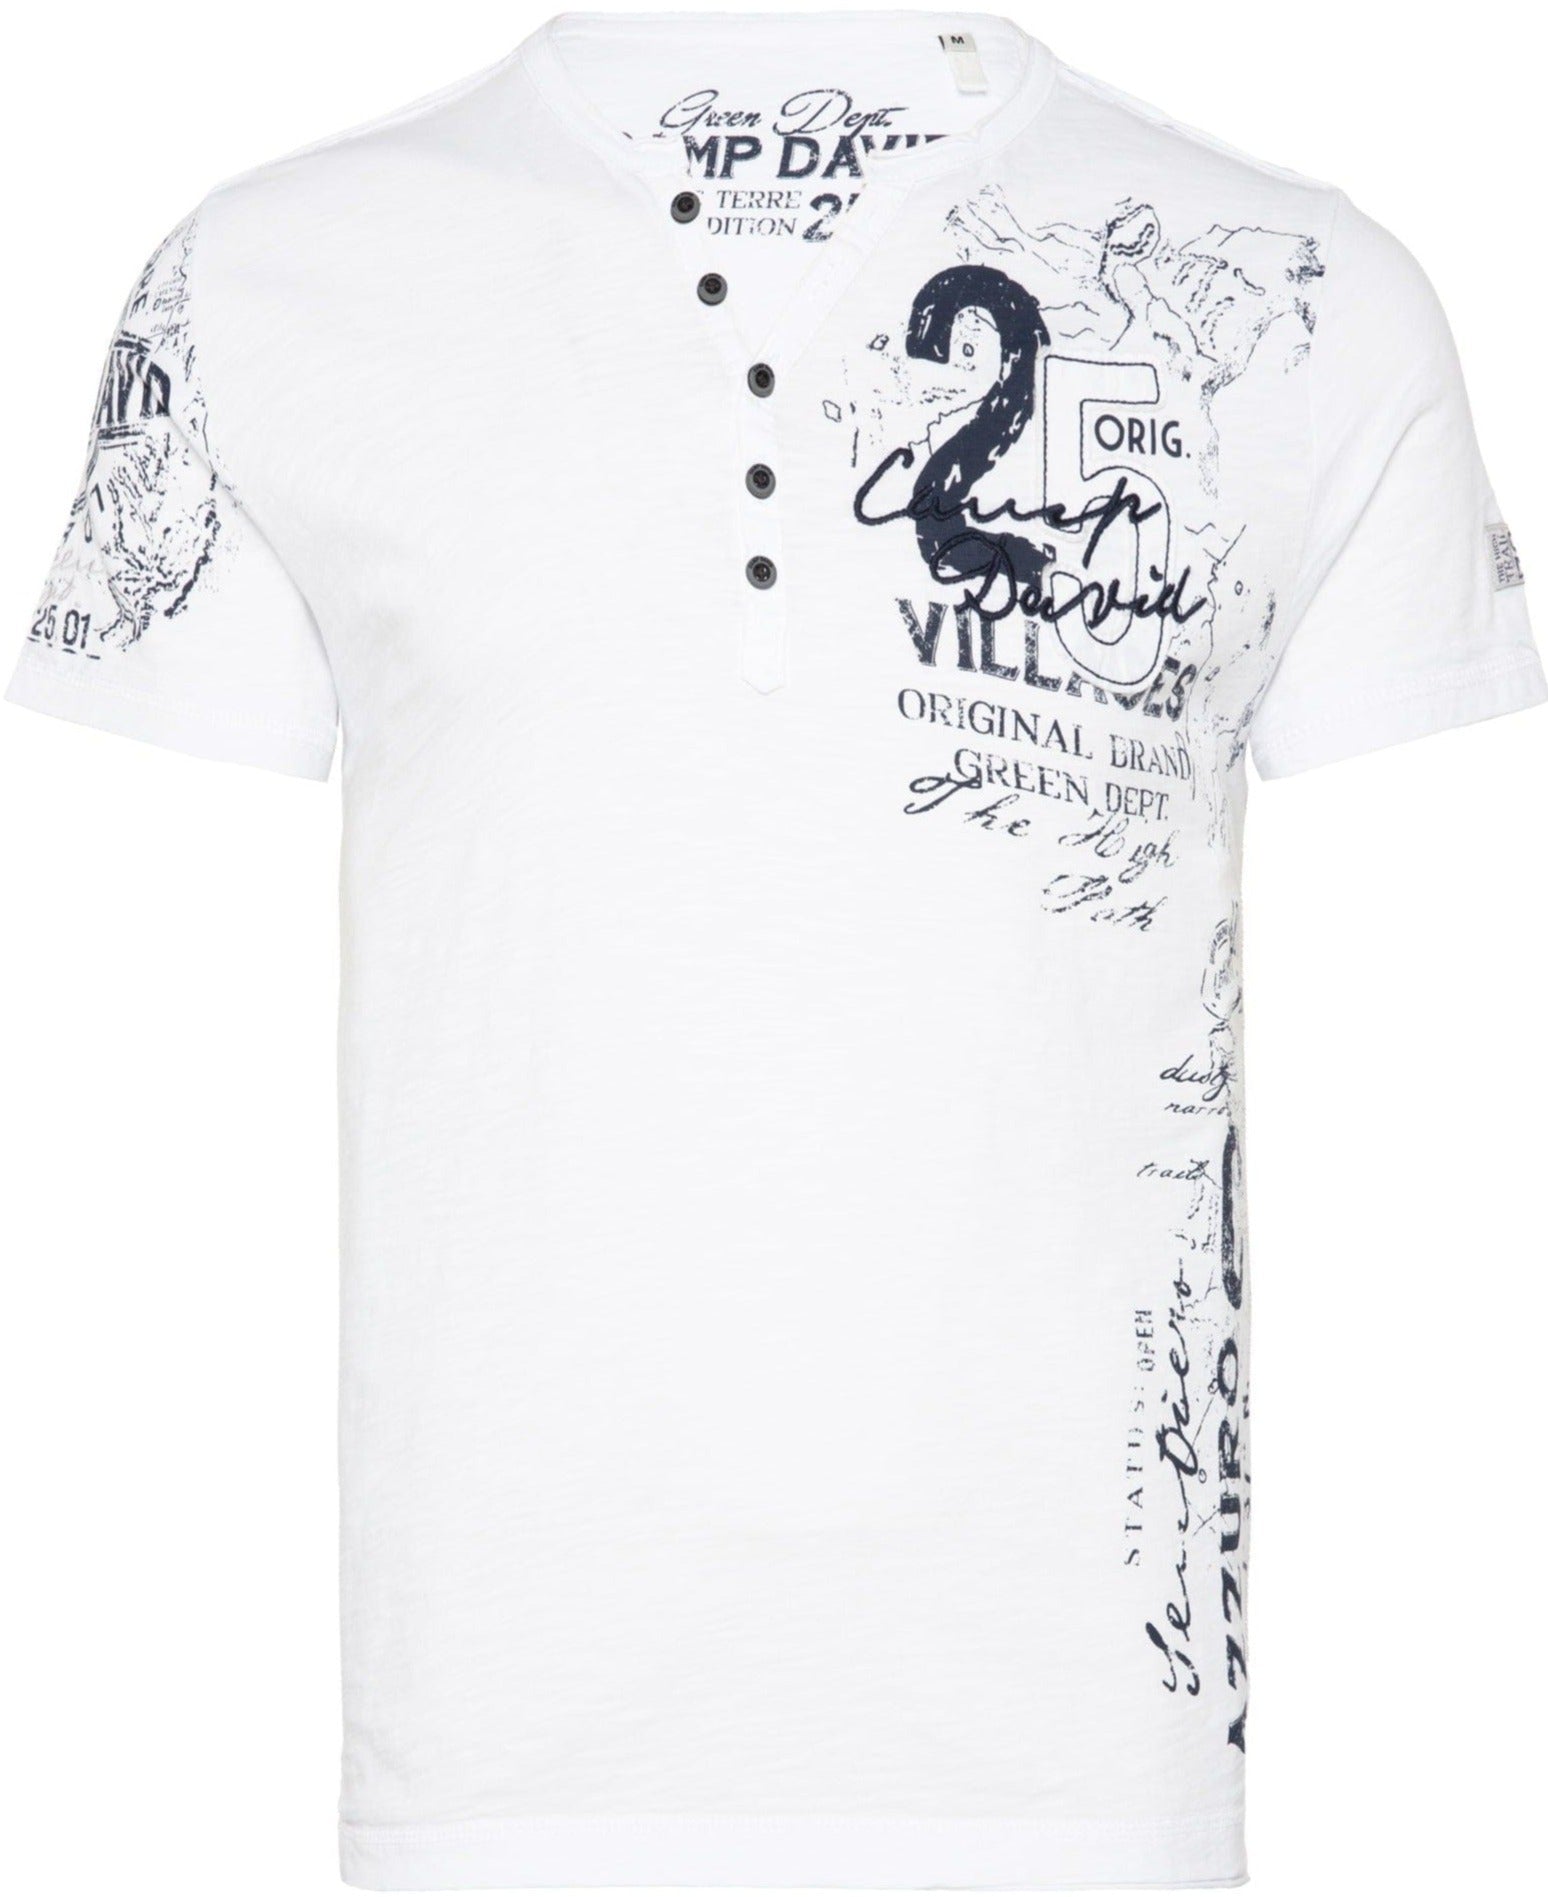 Fashion v-neck white Stateshop button optic Chique Terre, David Camp - T-Shirt,